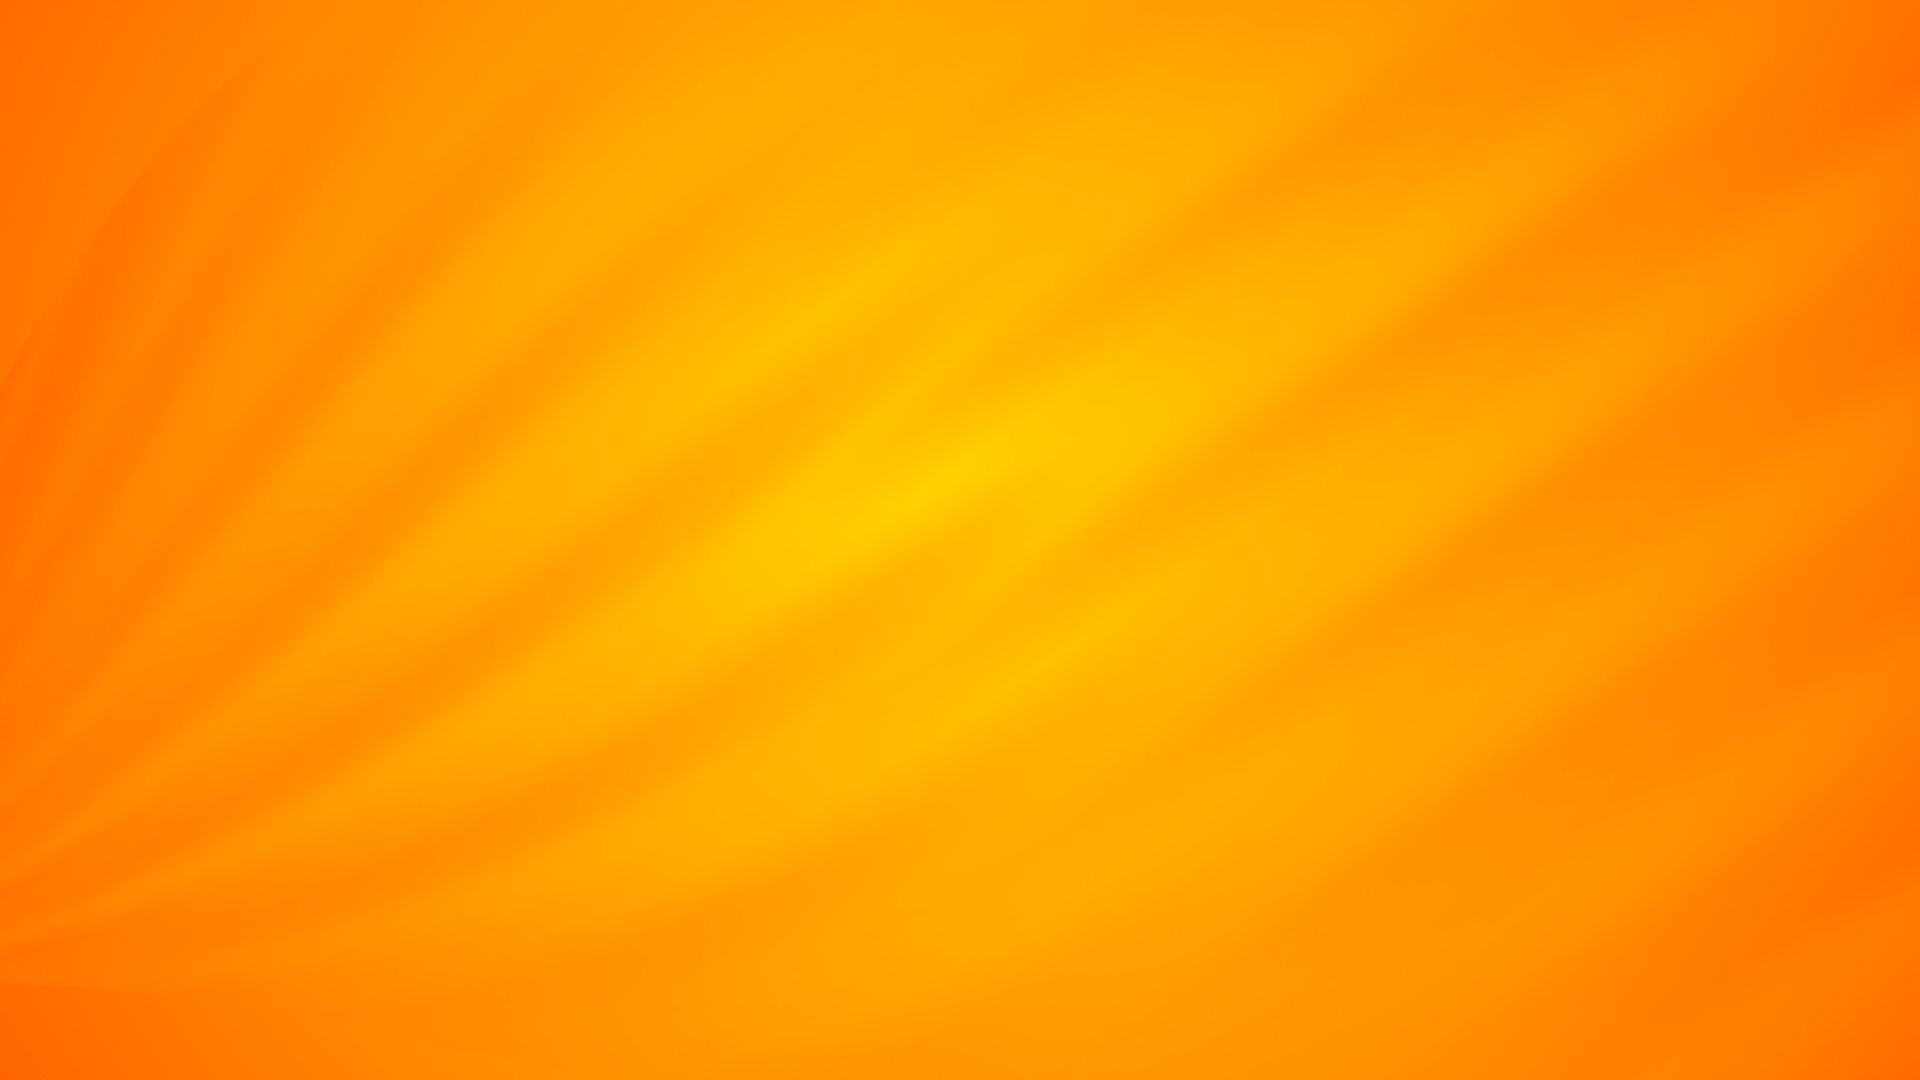 One colour plain single orange solid 1024x576 wallpaper 4K HD